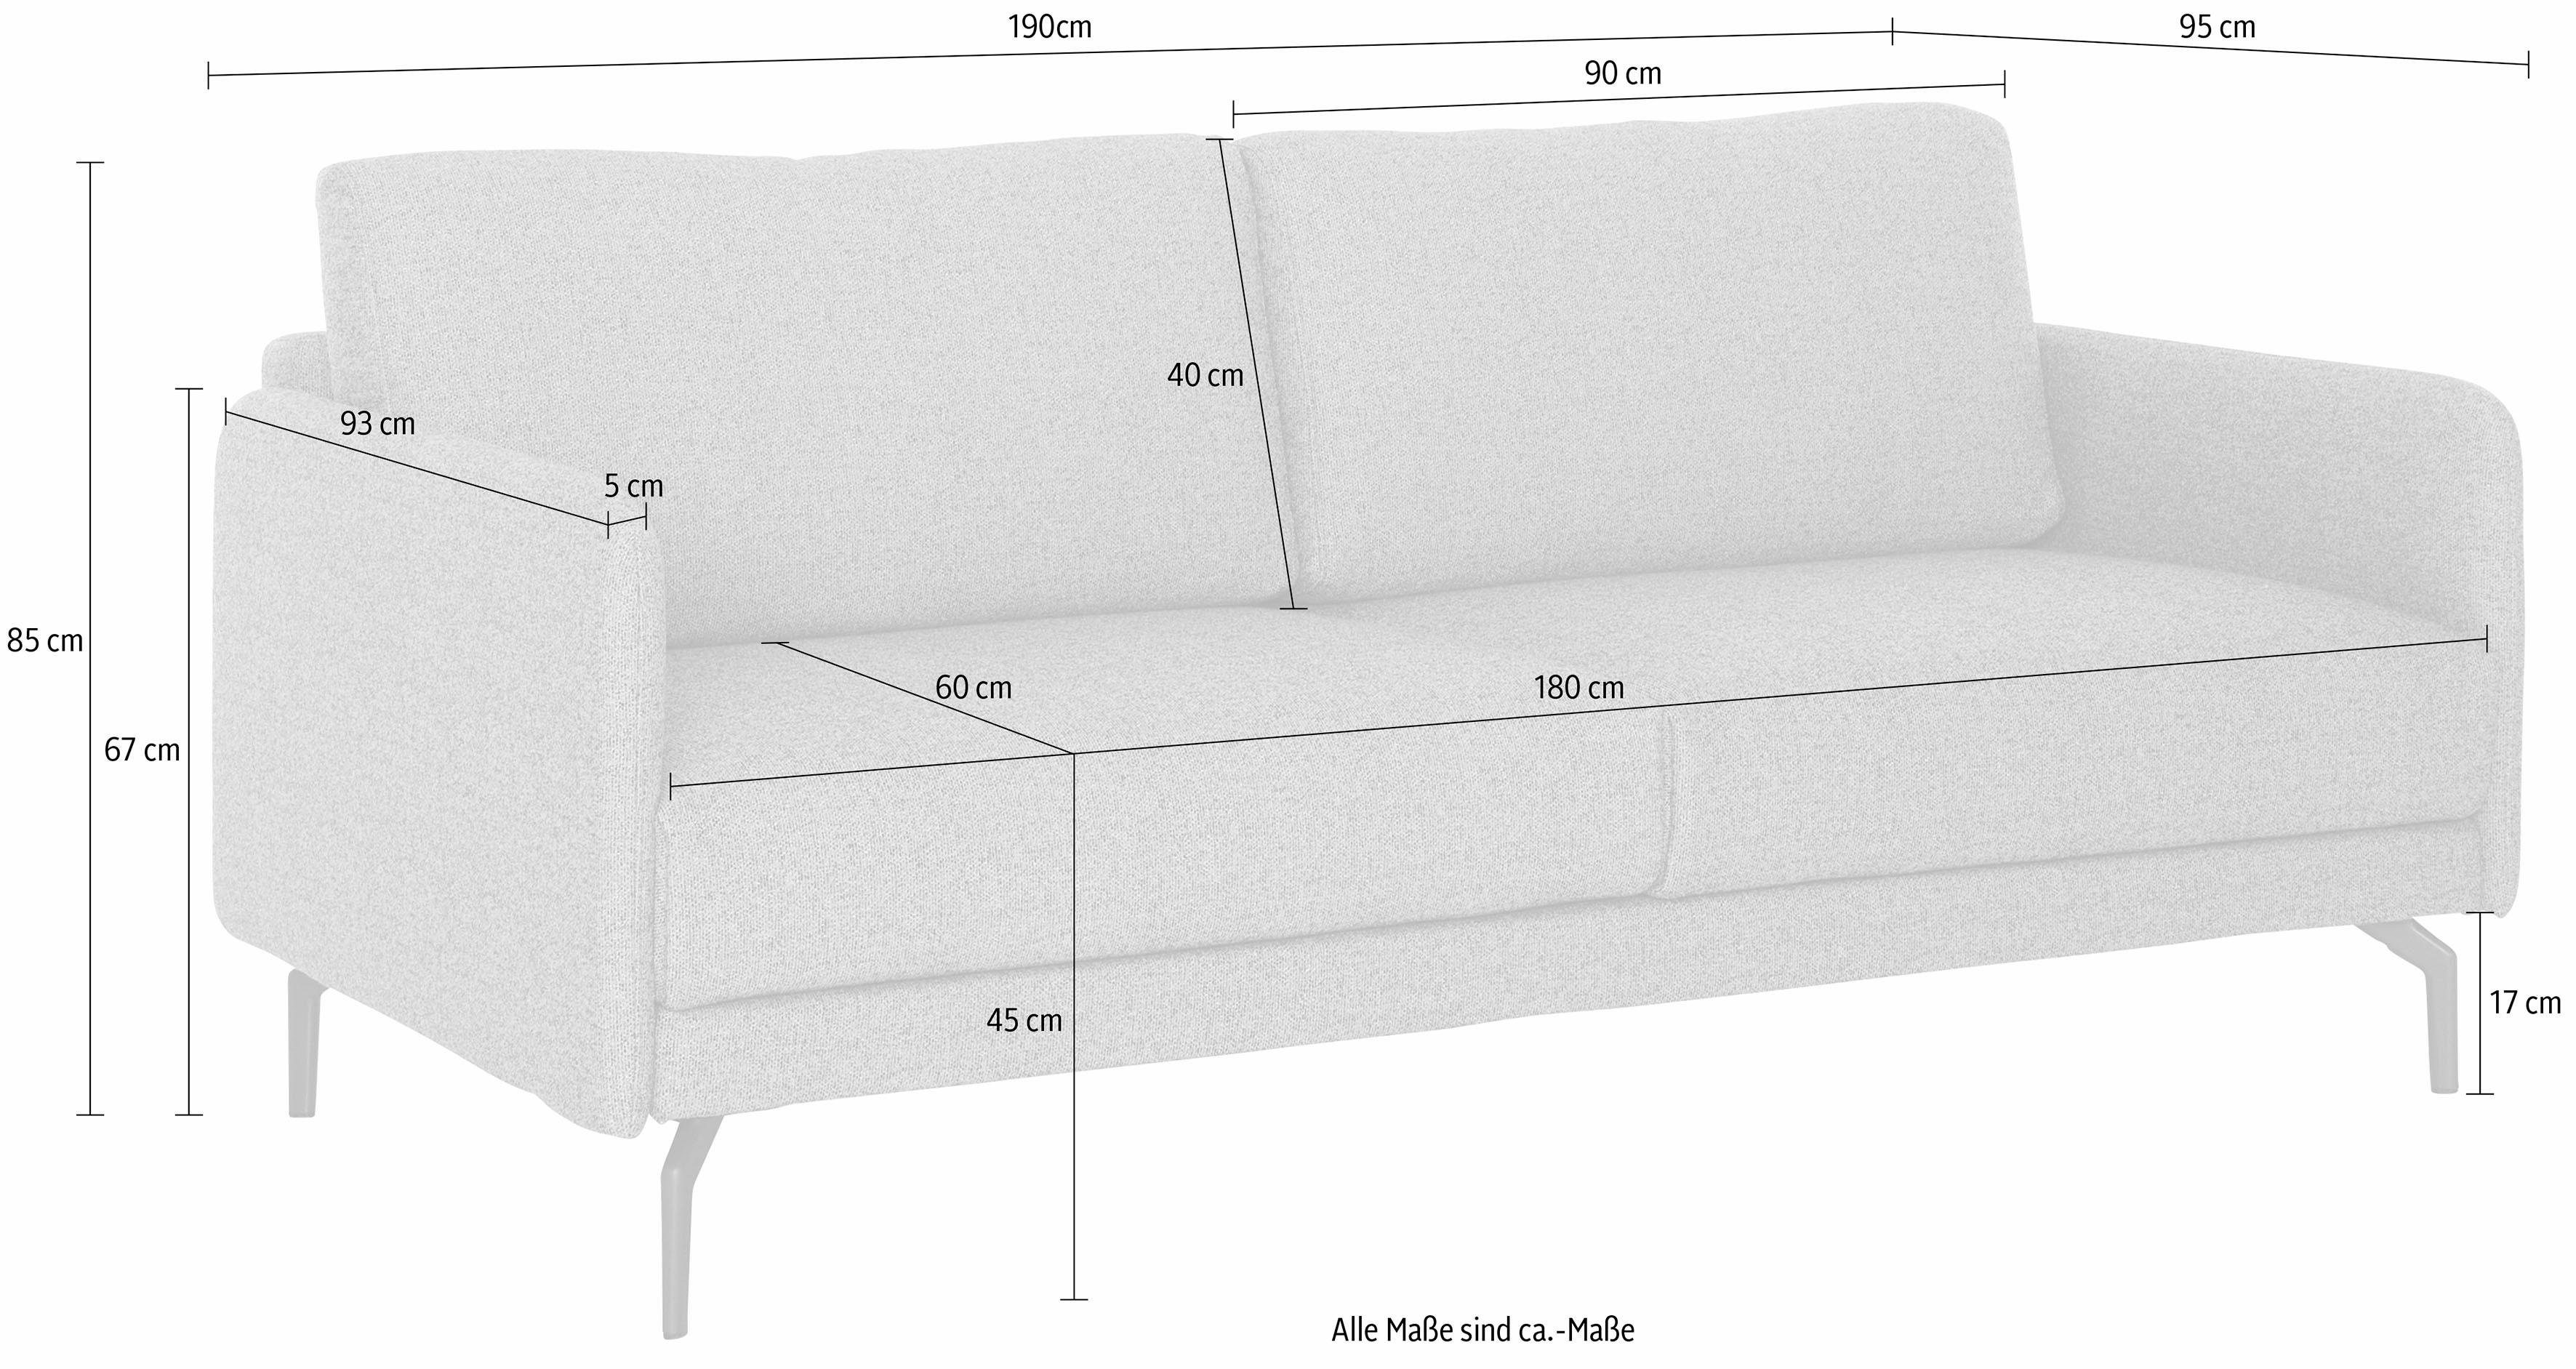 Alugussfuß hs.450, sehr 3-Sitzer Breite cm, sofa Umbragrau hülsta 190 schmal, Armlehne